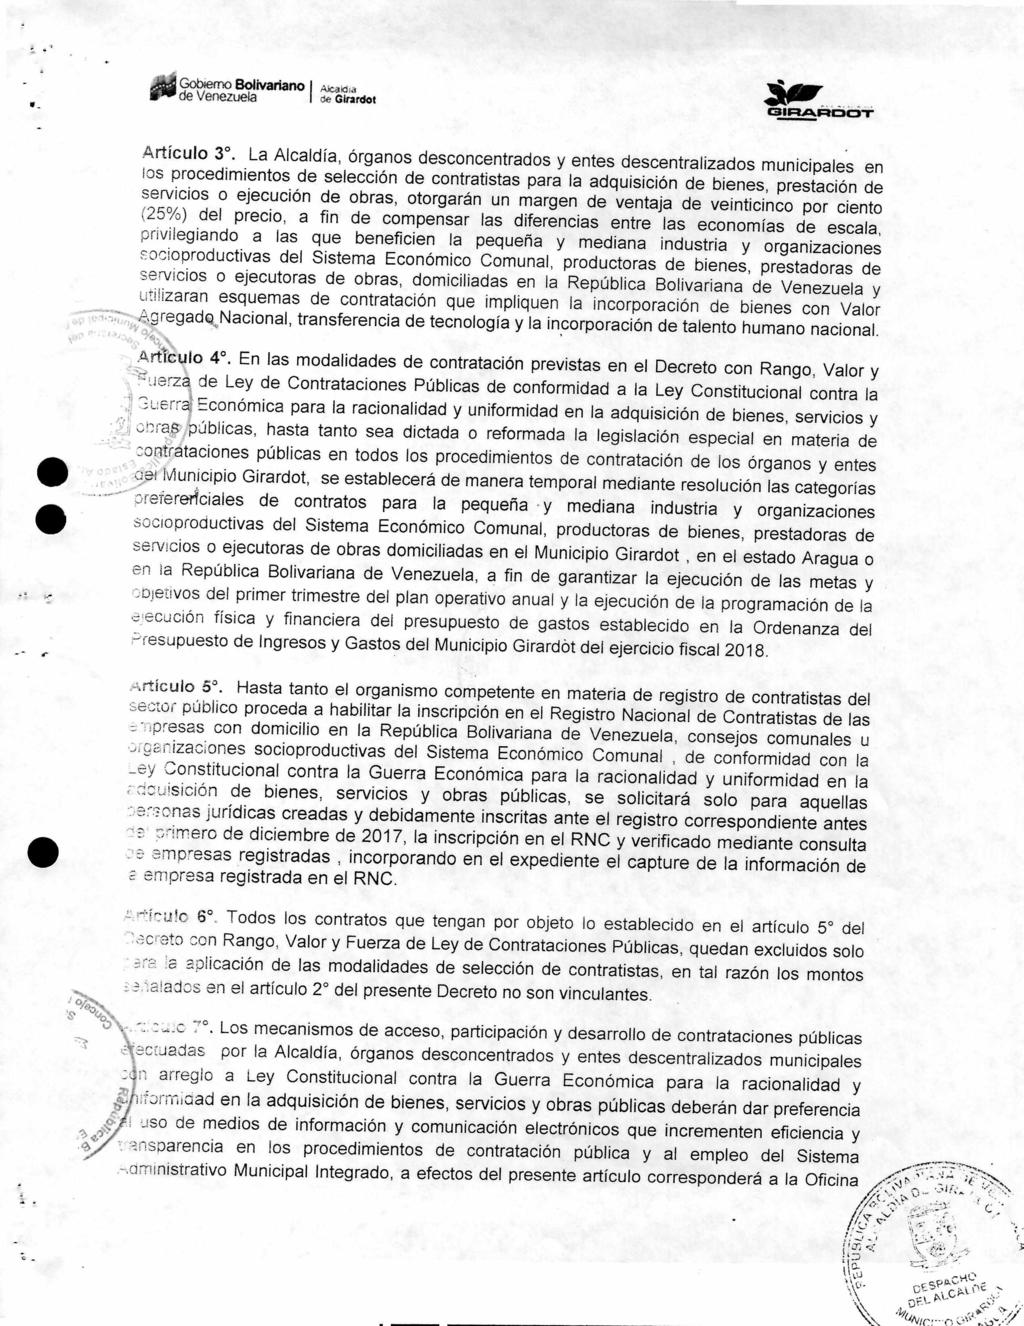 Jad Gobierno Bolivariano I Axad ami. de Venezuela f cle Gltardot 301F % can:lrhliabtiv' Artículo 3.